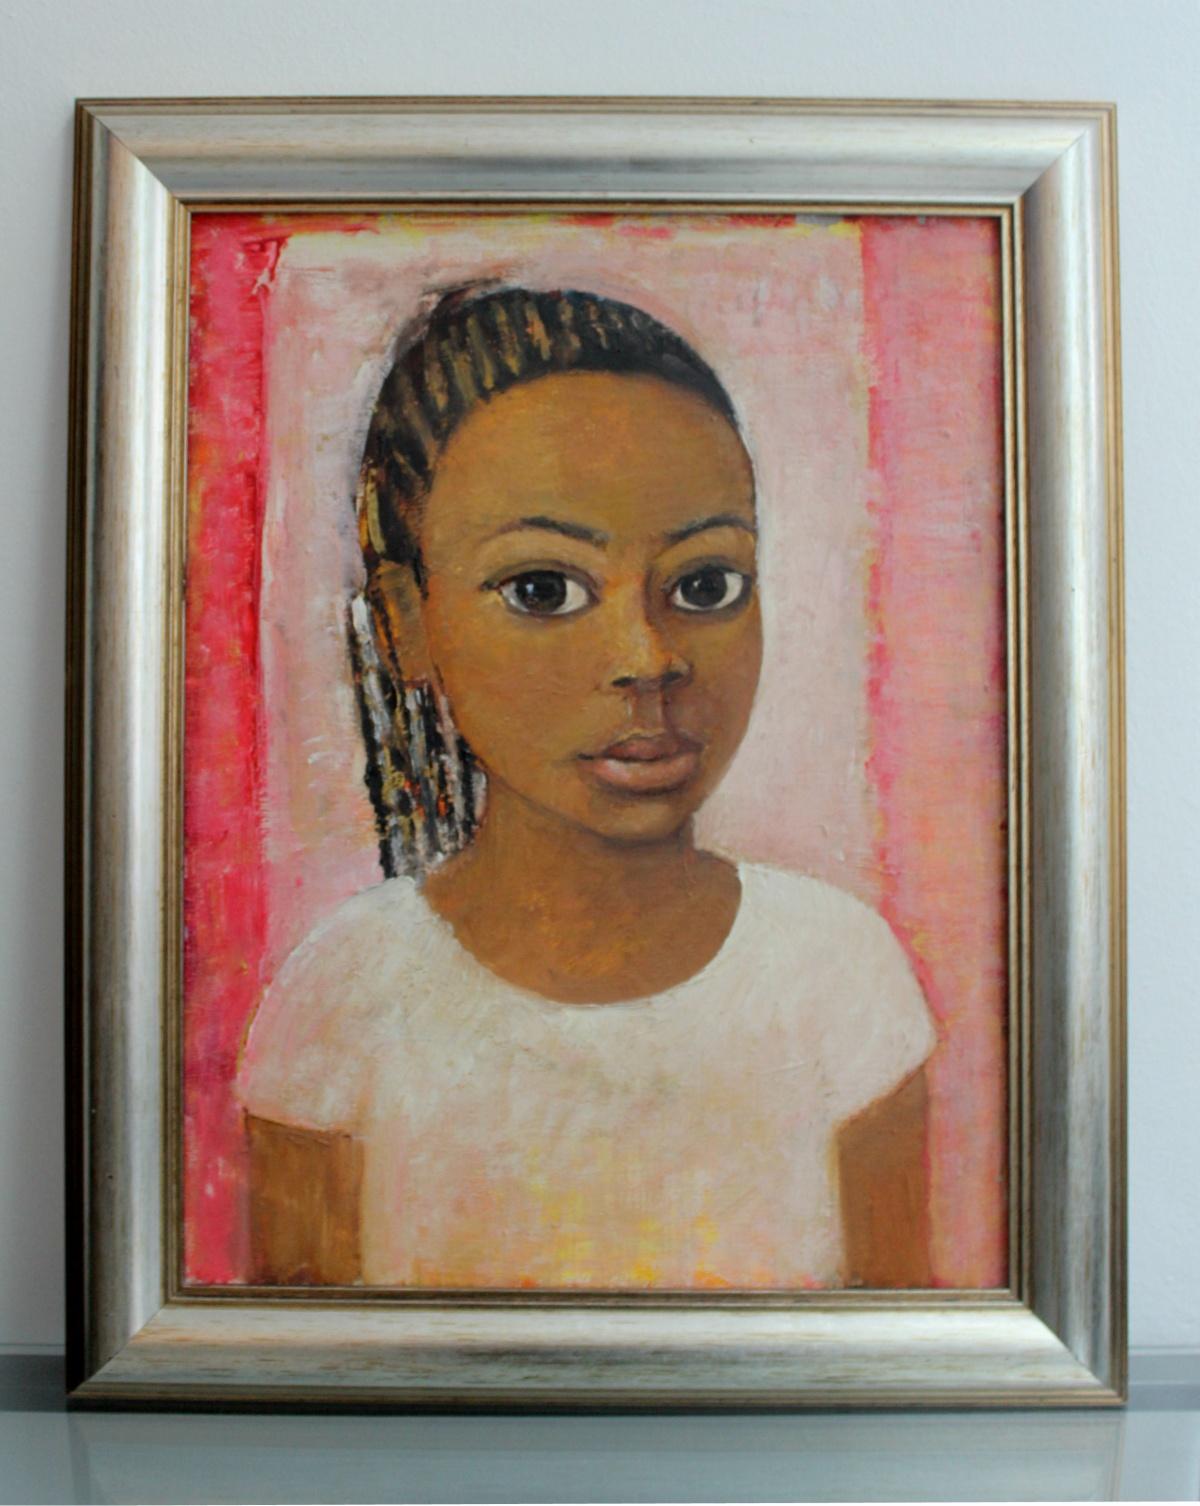 Portrait - XXI century, Oil figurative painting, Pink, Warm tones, Big eyes - Painting by Marlena Nizio